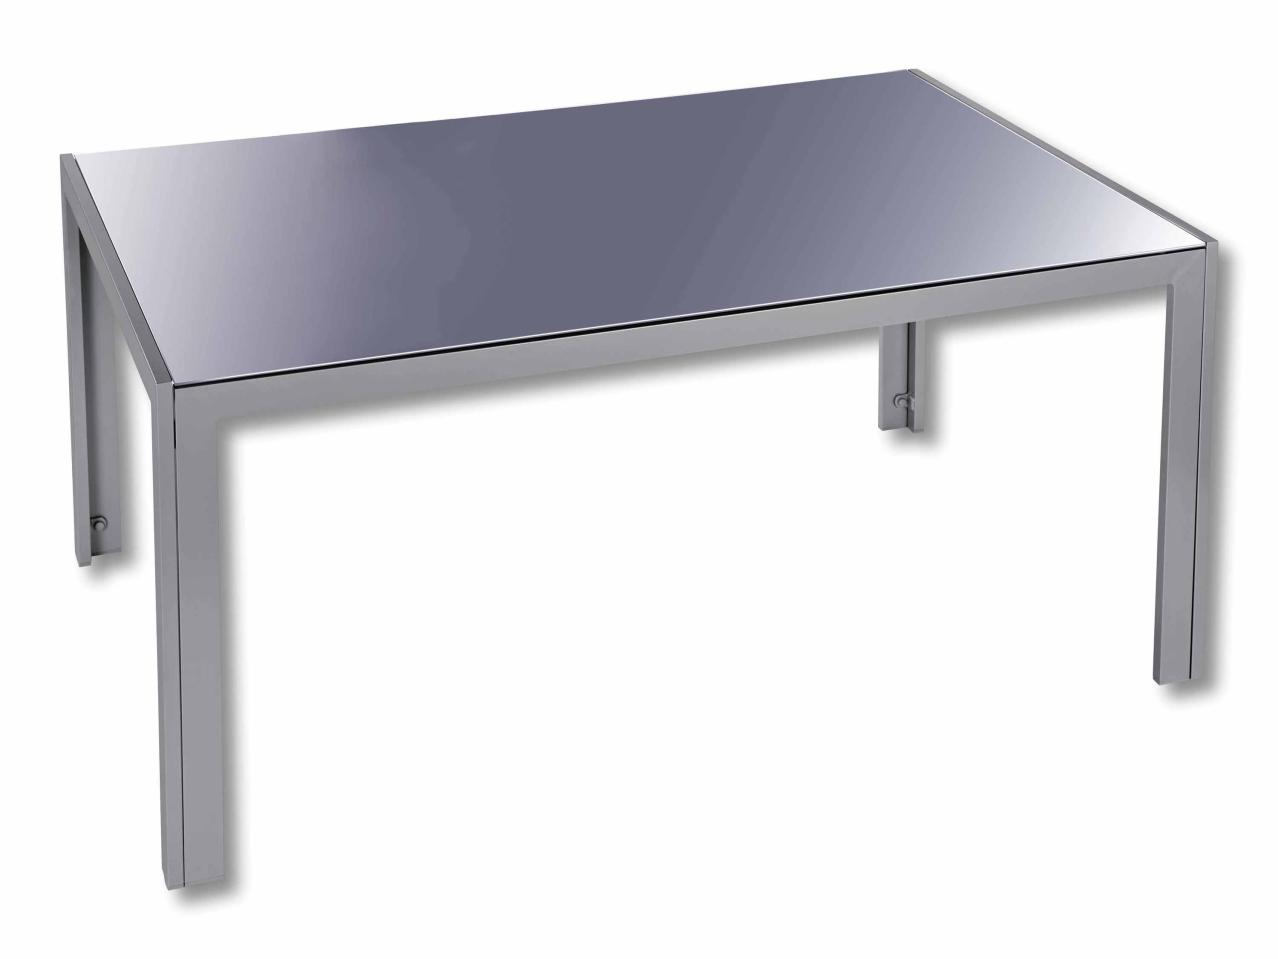 Table en verre et aluminium